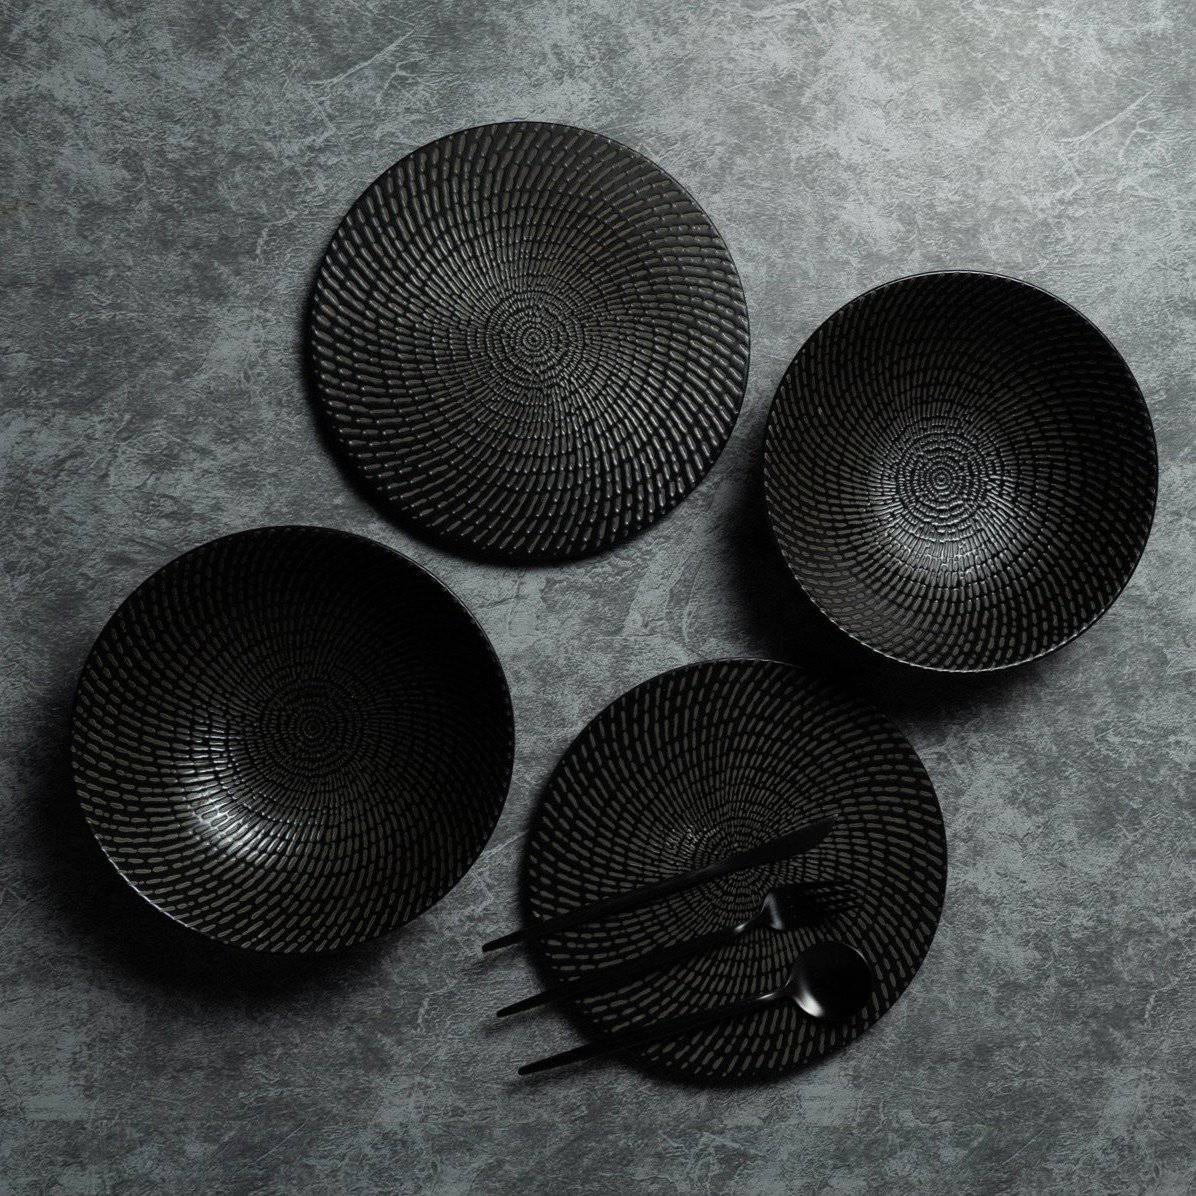 Tableware Mangata Modern White/Black Ceramic Bowl - The Decor Circle